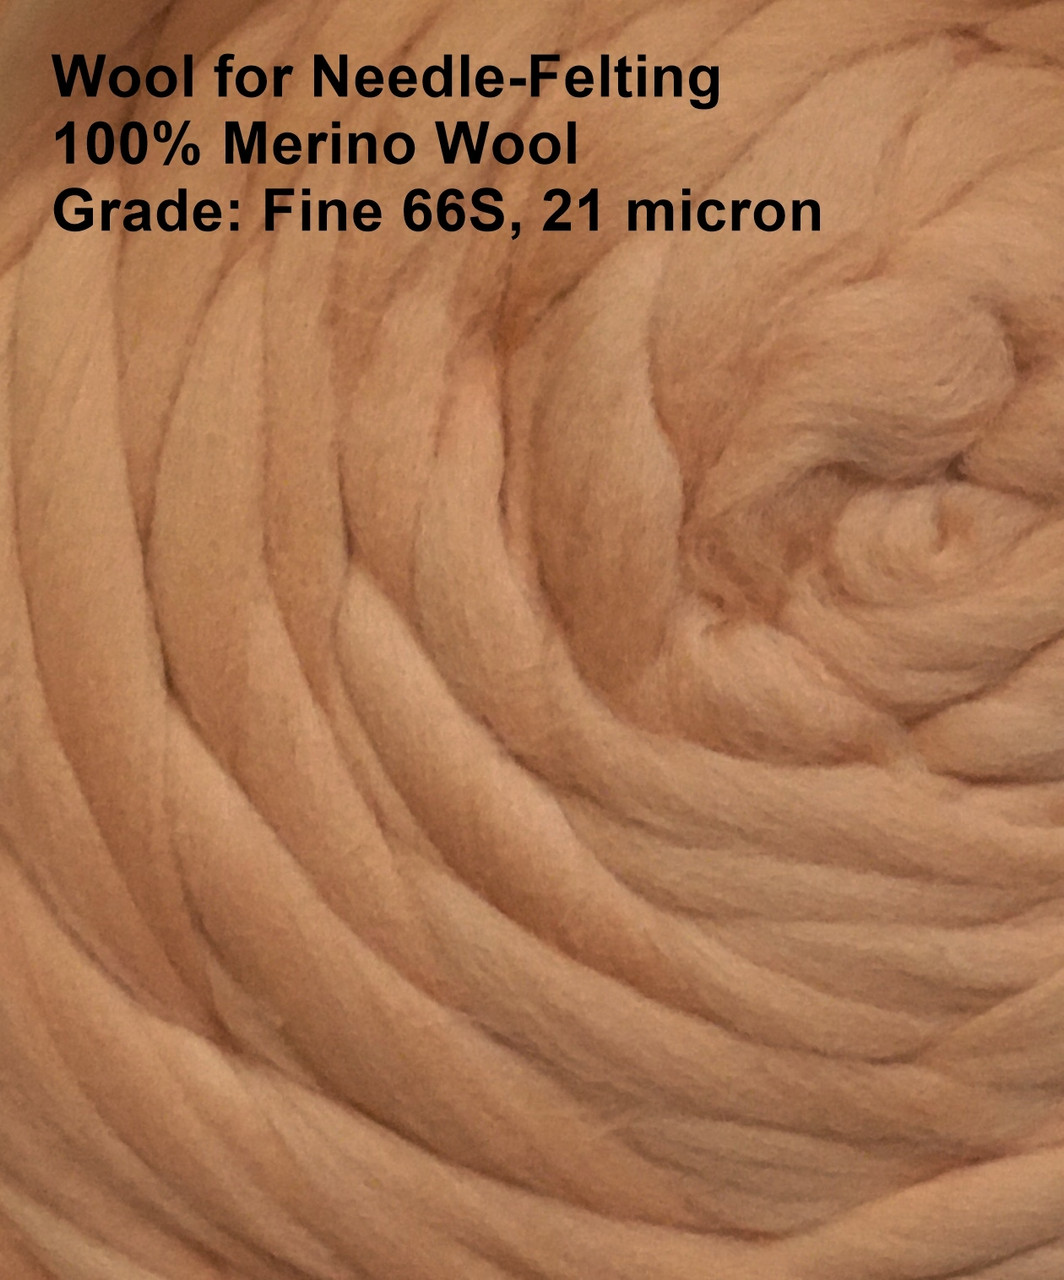 HR053-500 MOREZMORE LIGHT TAN FLESH SKIN TONE 500g 100% Merino Fine Wool  Roving 66S